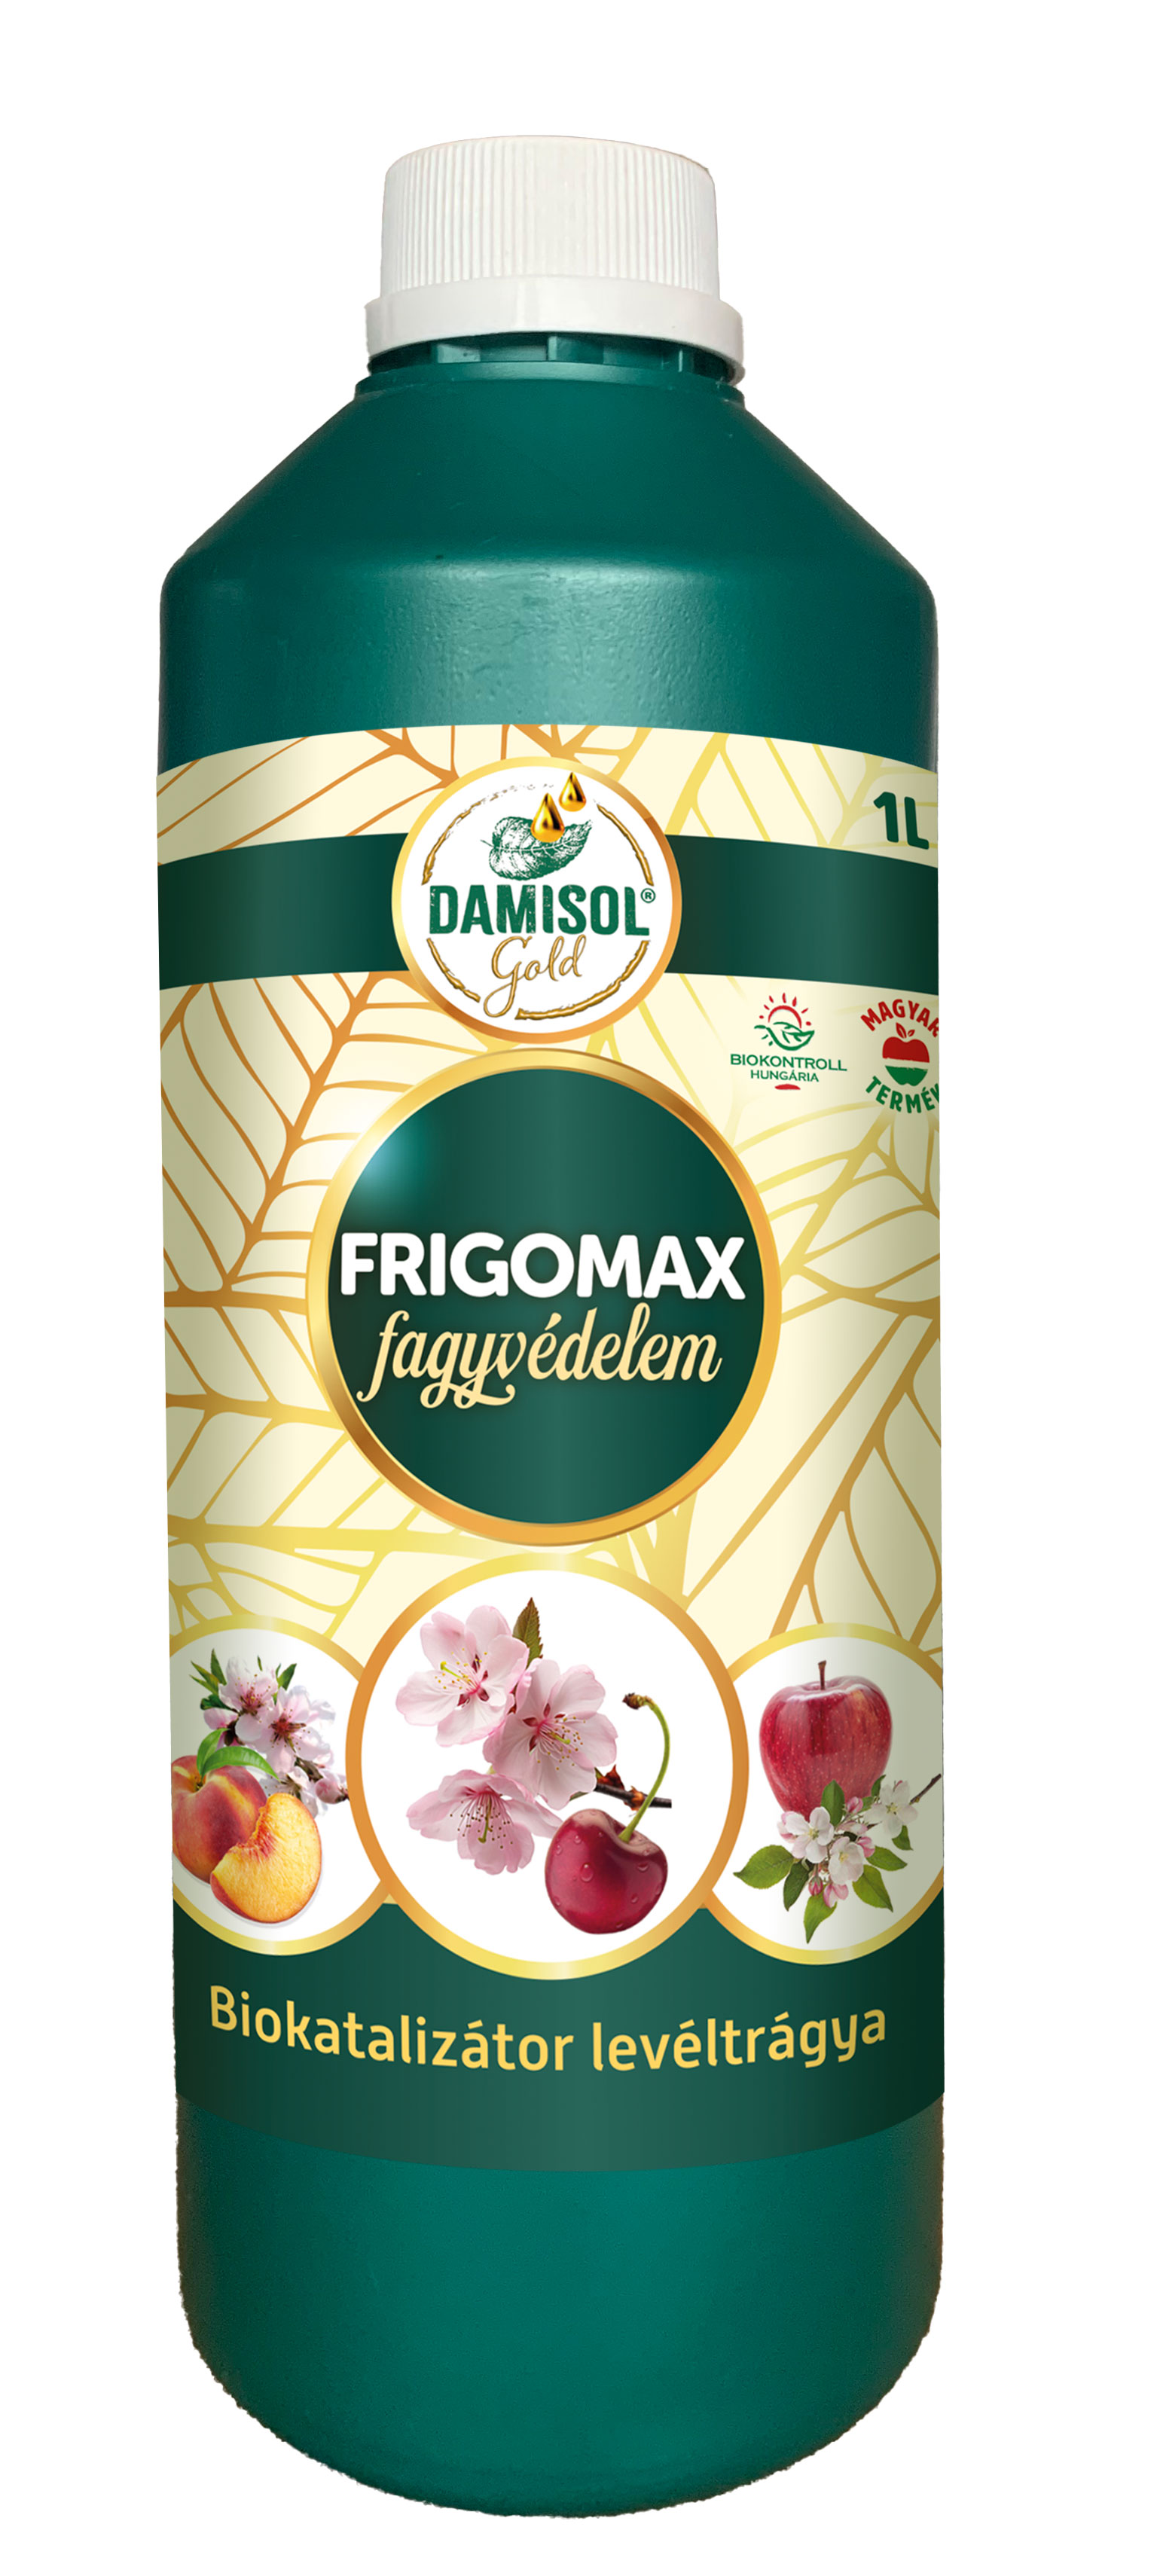 Damisol Gold Frigomax ochrana proti mrazu 1 l